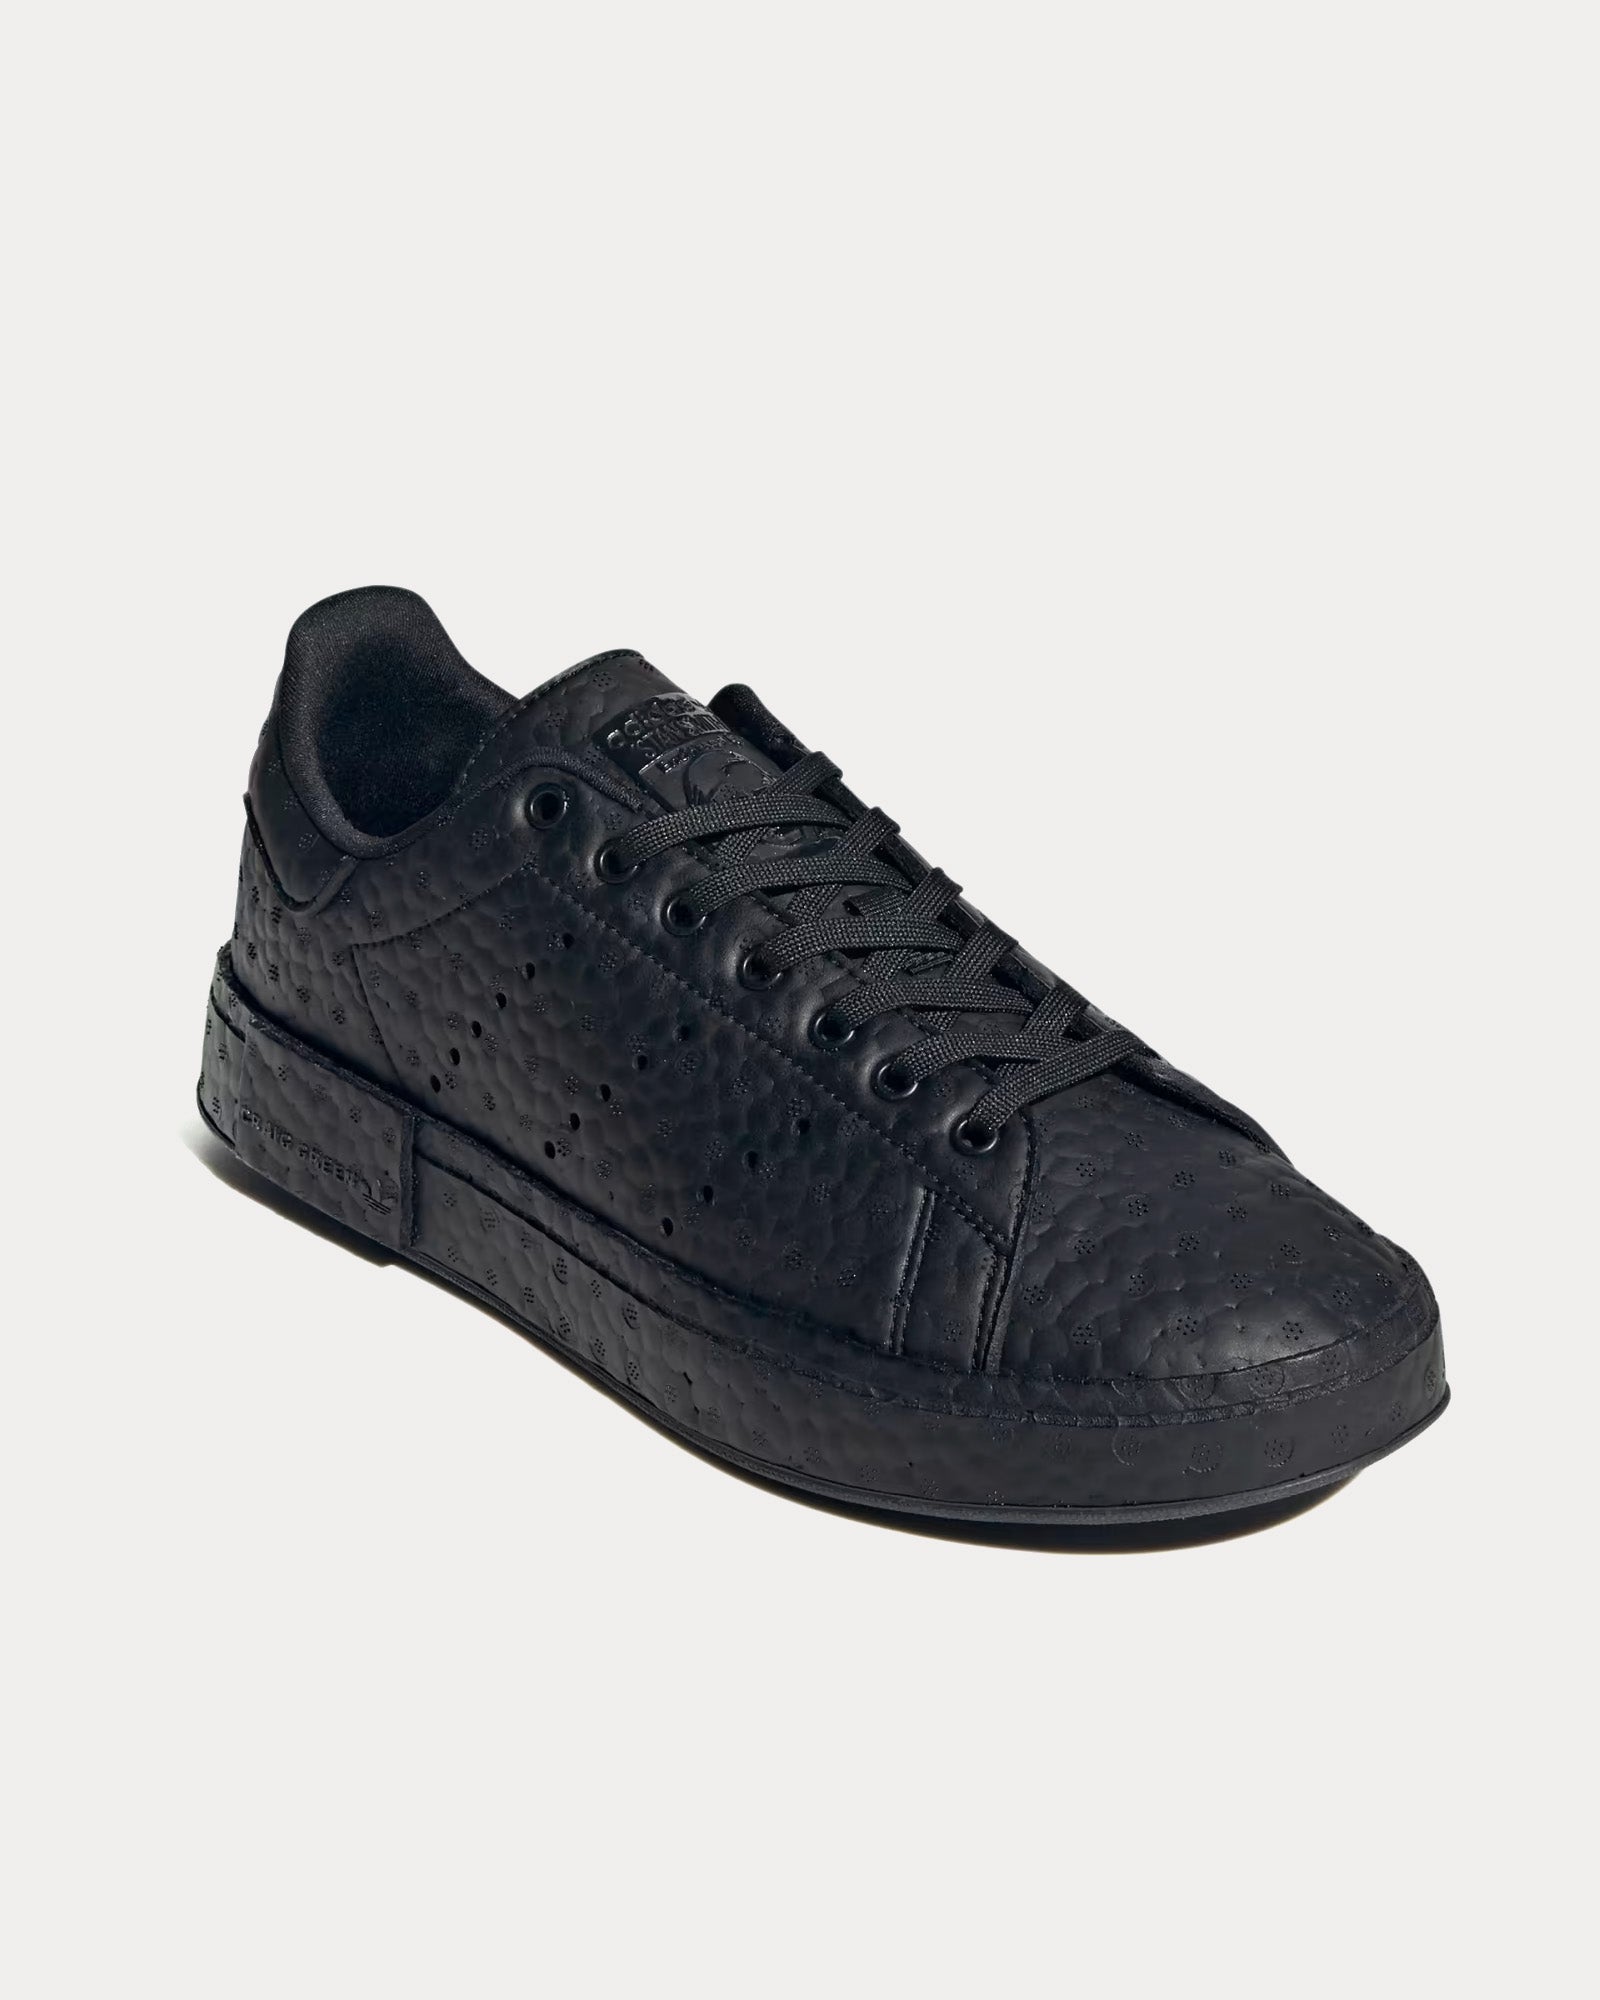 Adidas x Craig Green - Stan Smith Boost Core Black / Core Black / Core Black Low Top Sneakers